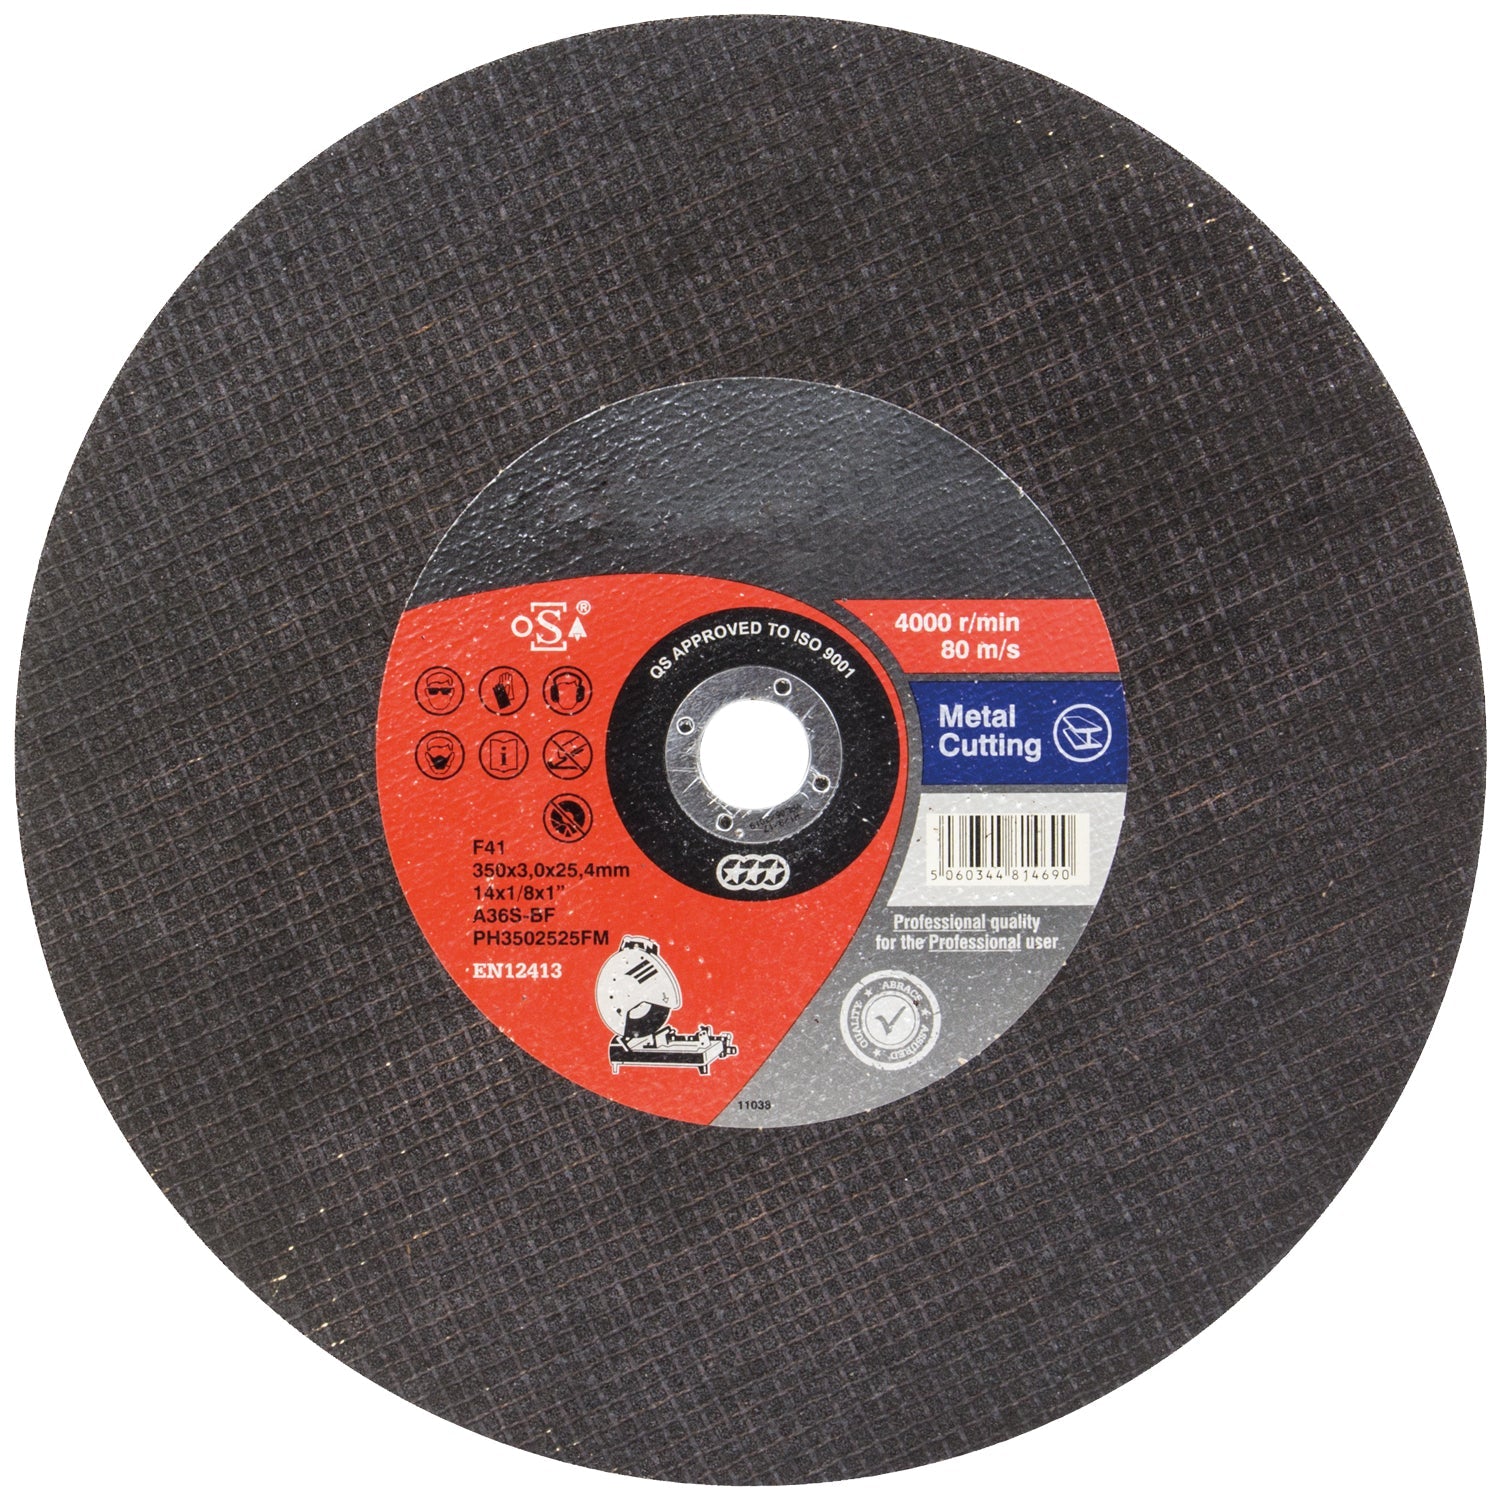 SIP 14" Abrasive Disc, Sip Industrial